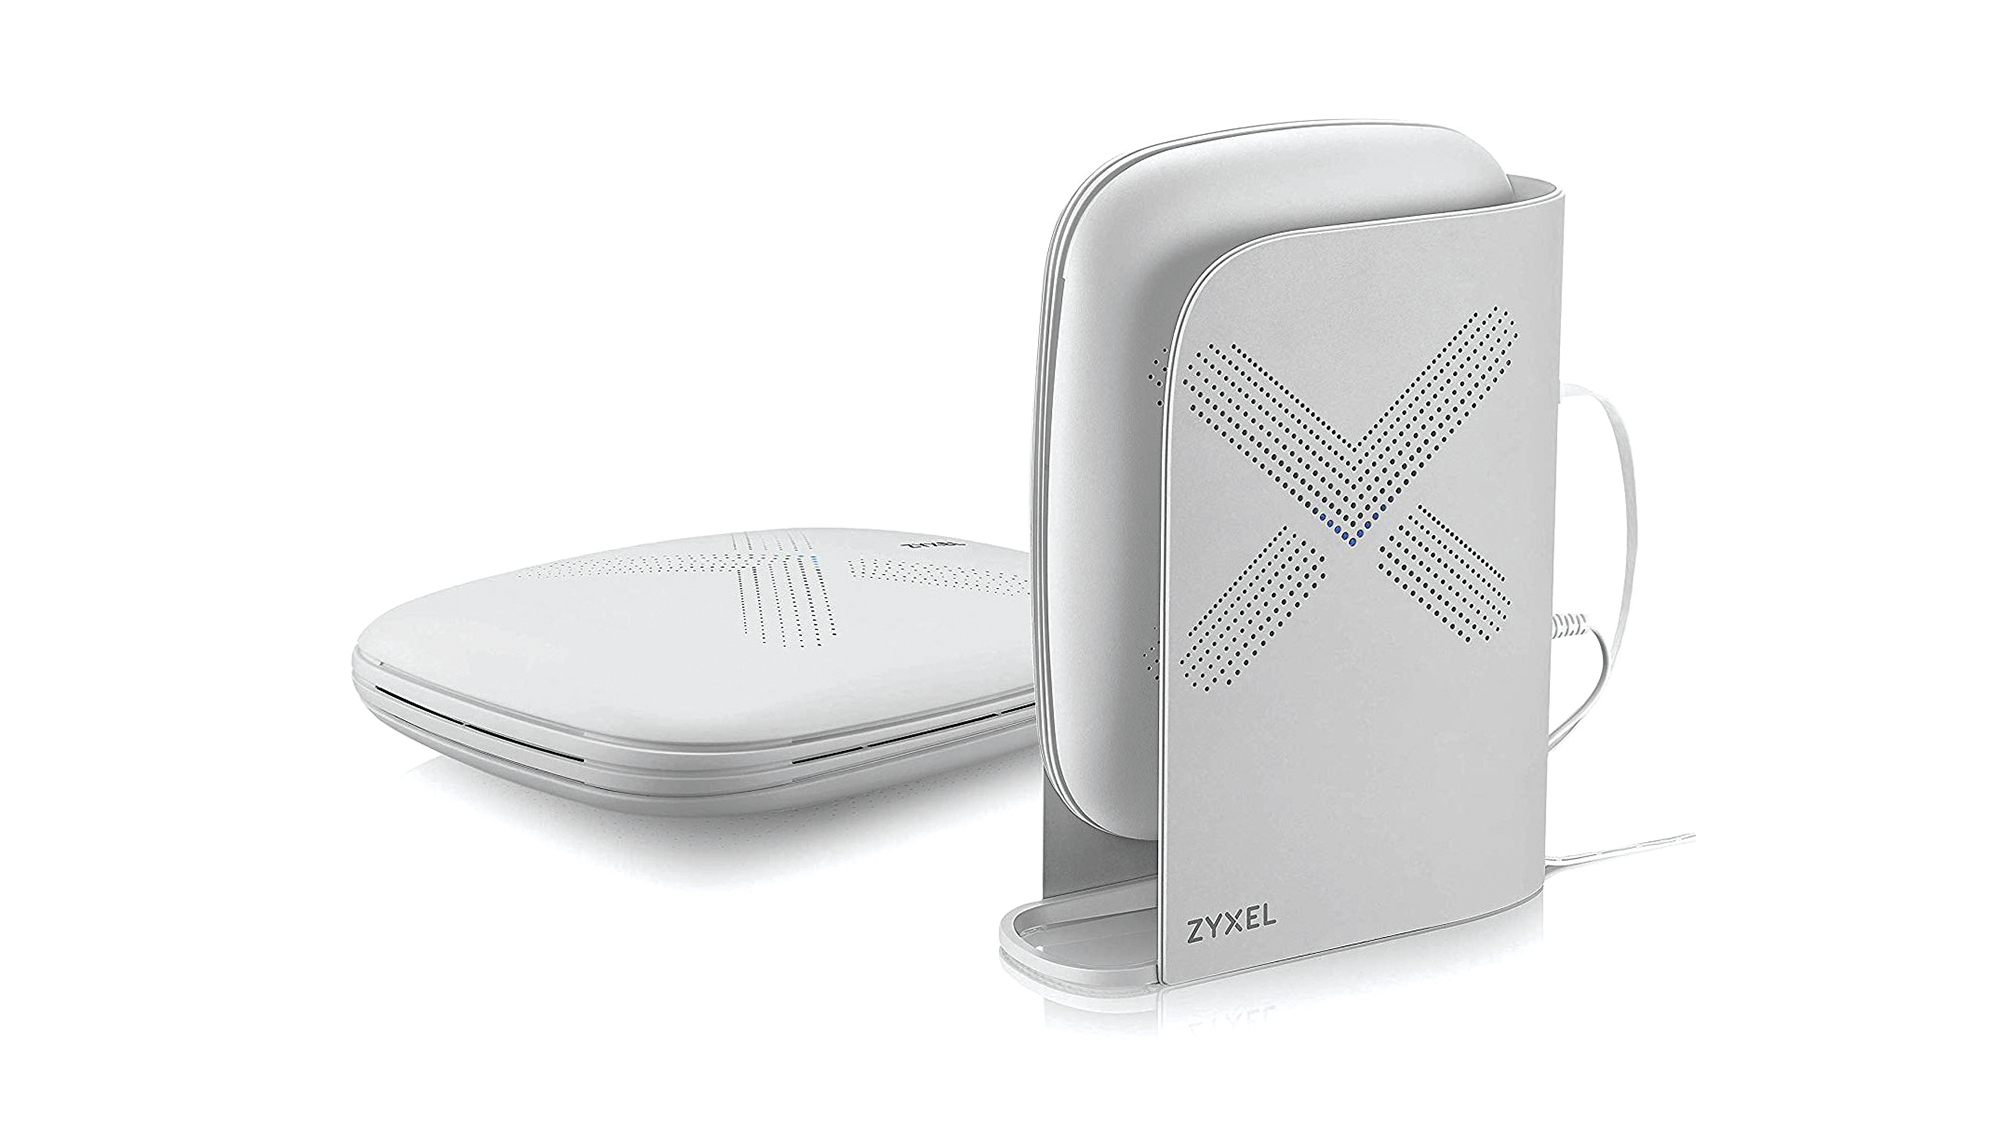 Zyxel Multy X AC3000 Tri-Band Wi-Fi System Review